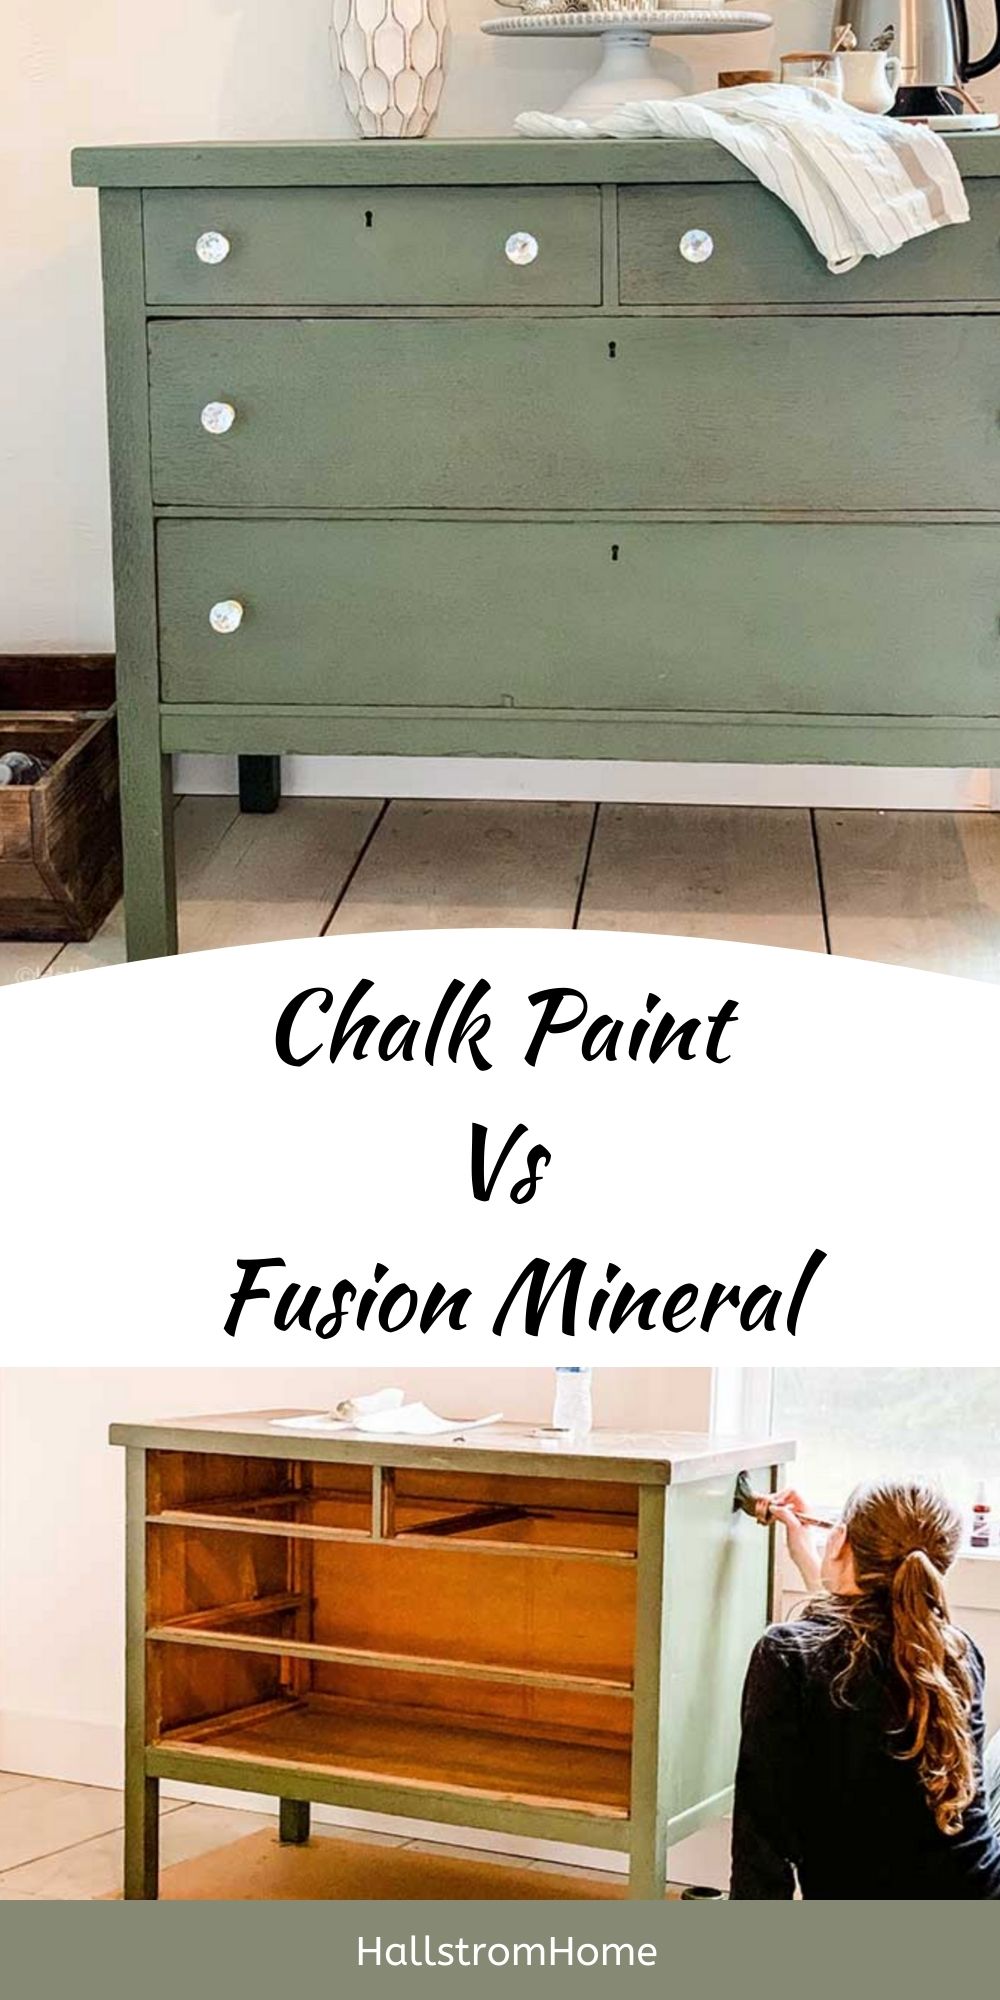 Why Use Chalk Paint Vs Regular Paint?